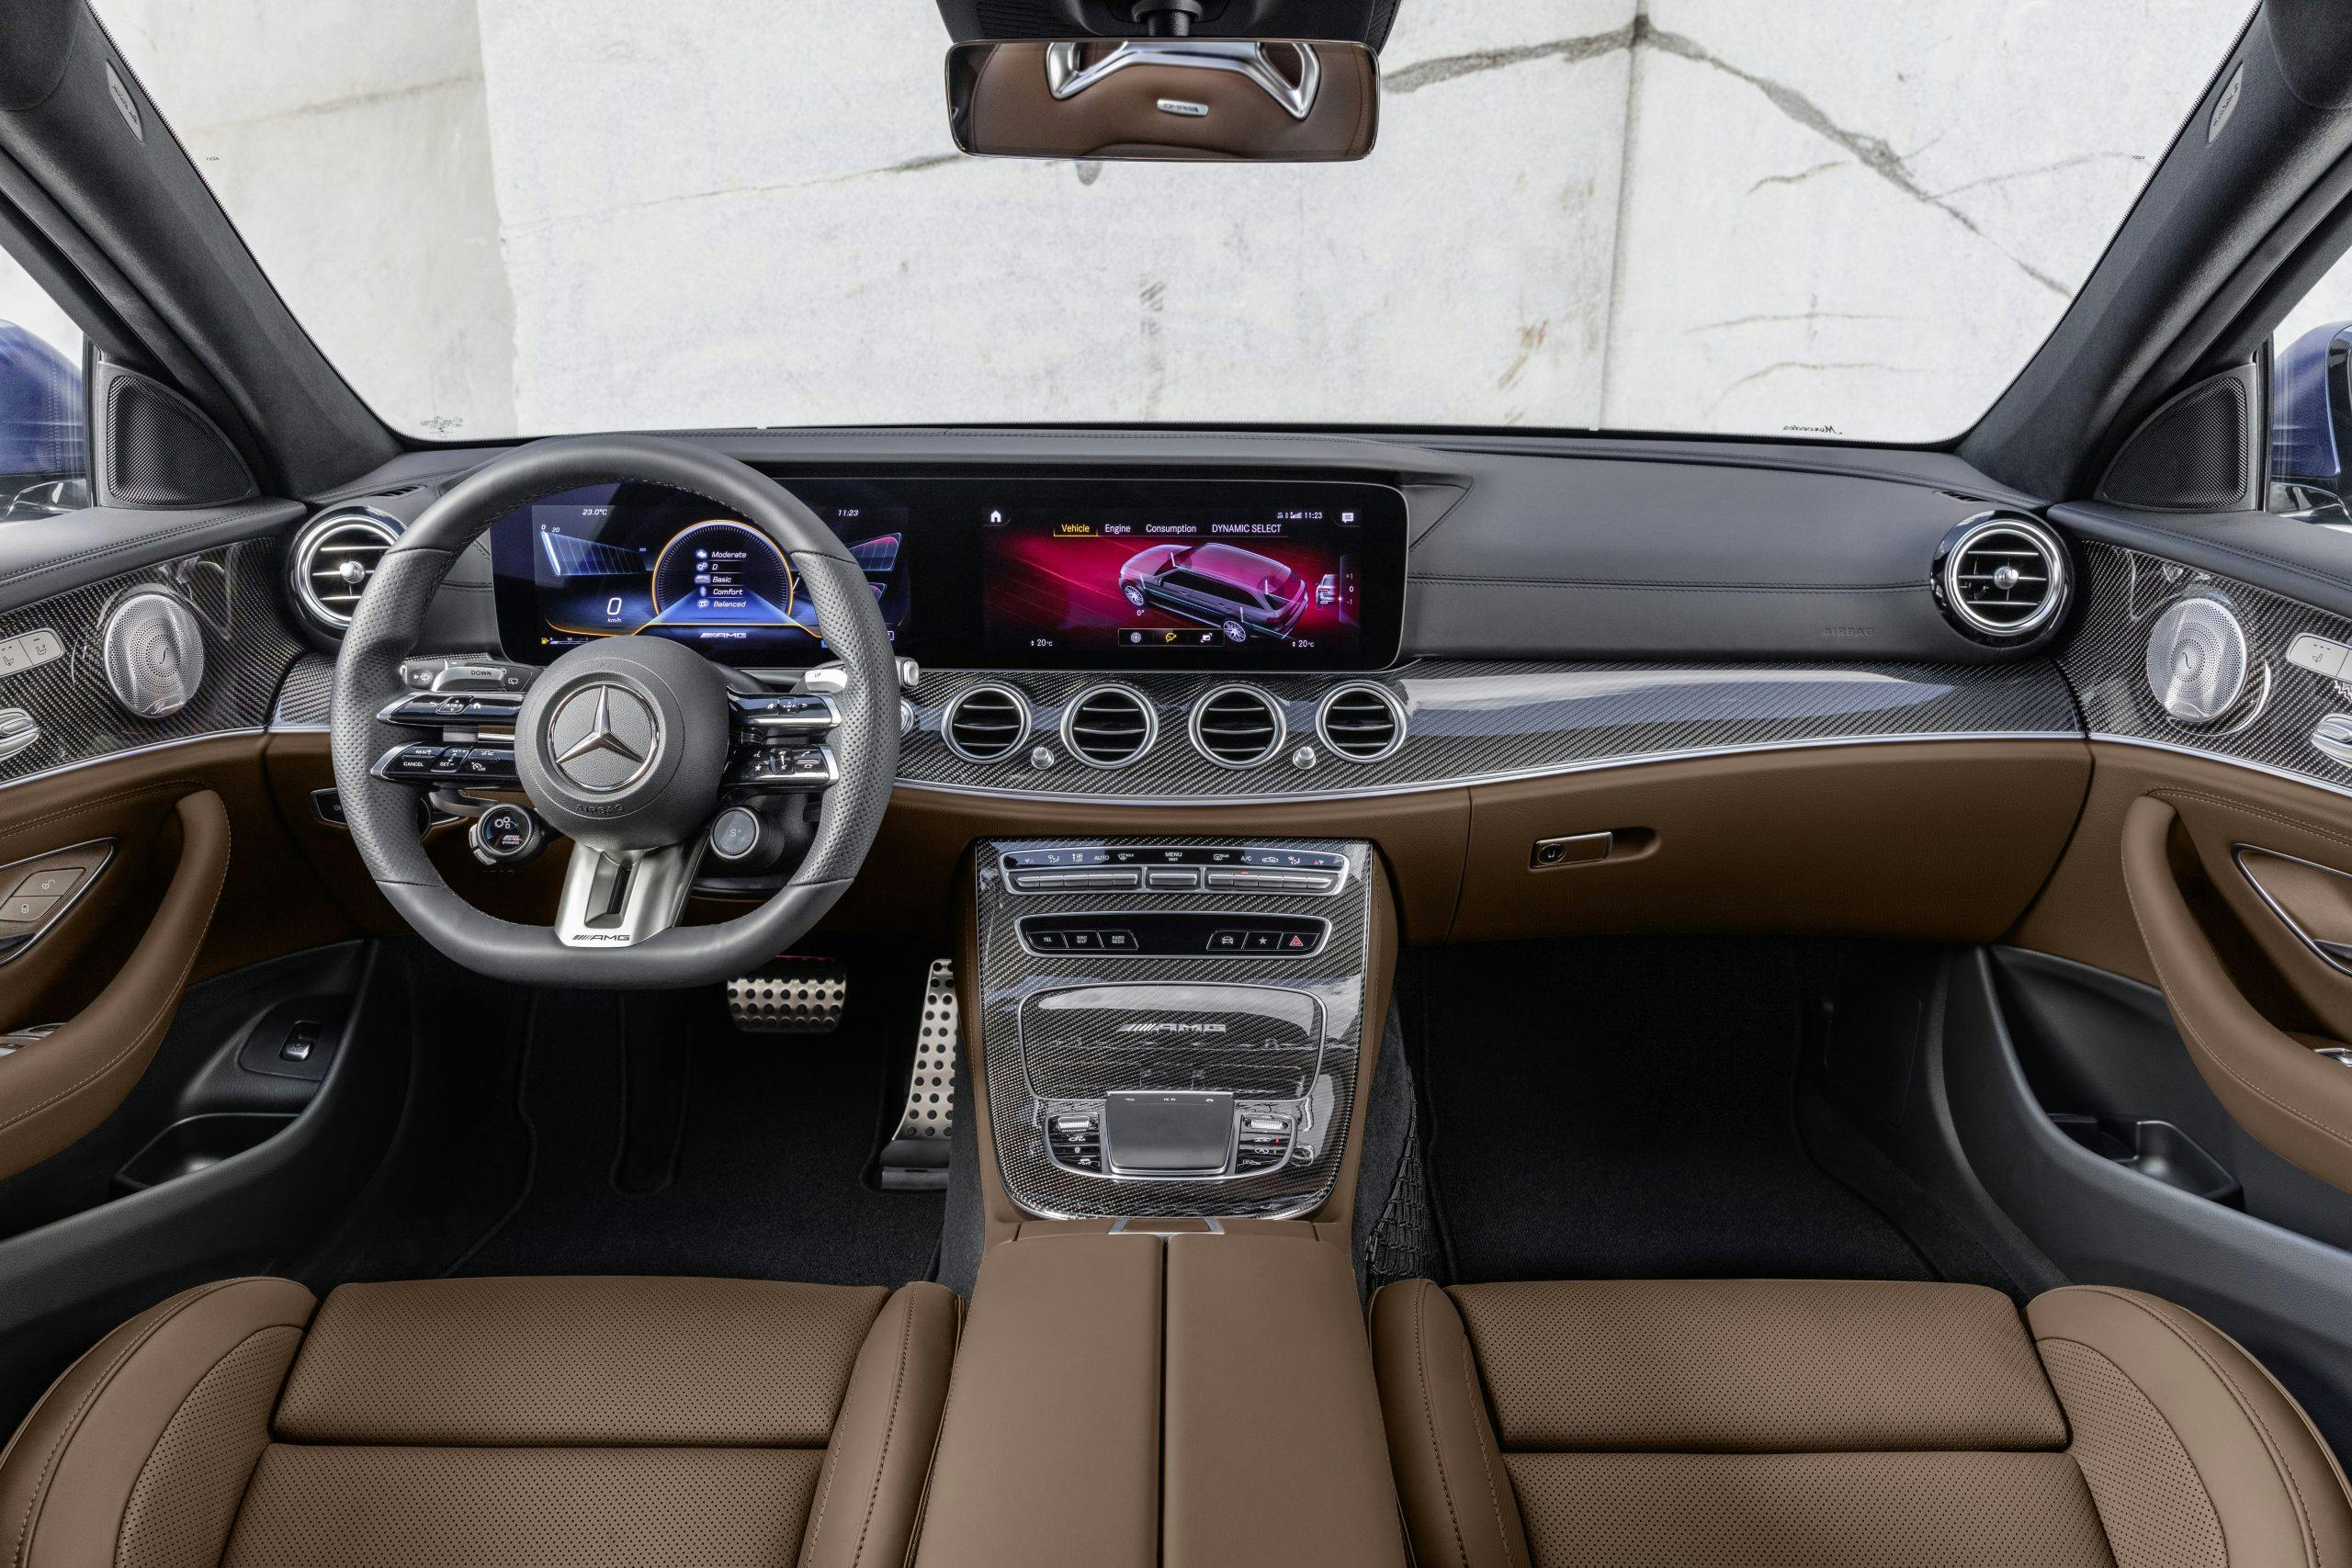 2021 Mercedes-AMG E63 S wagon interior